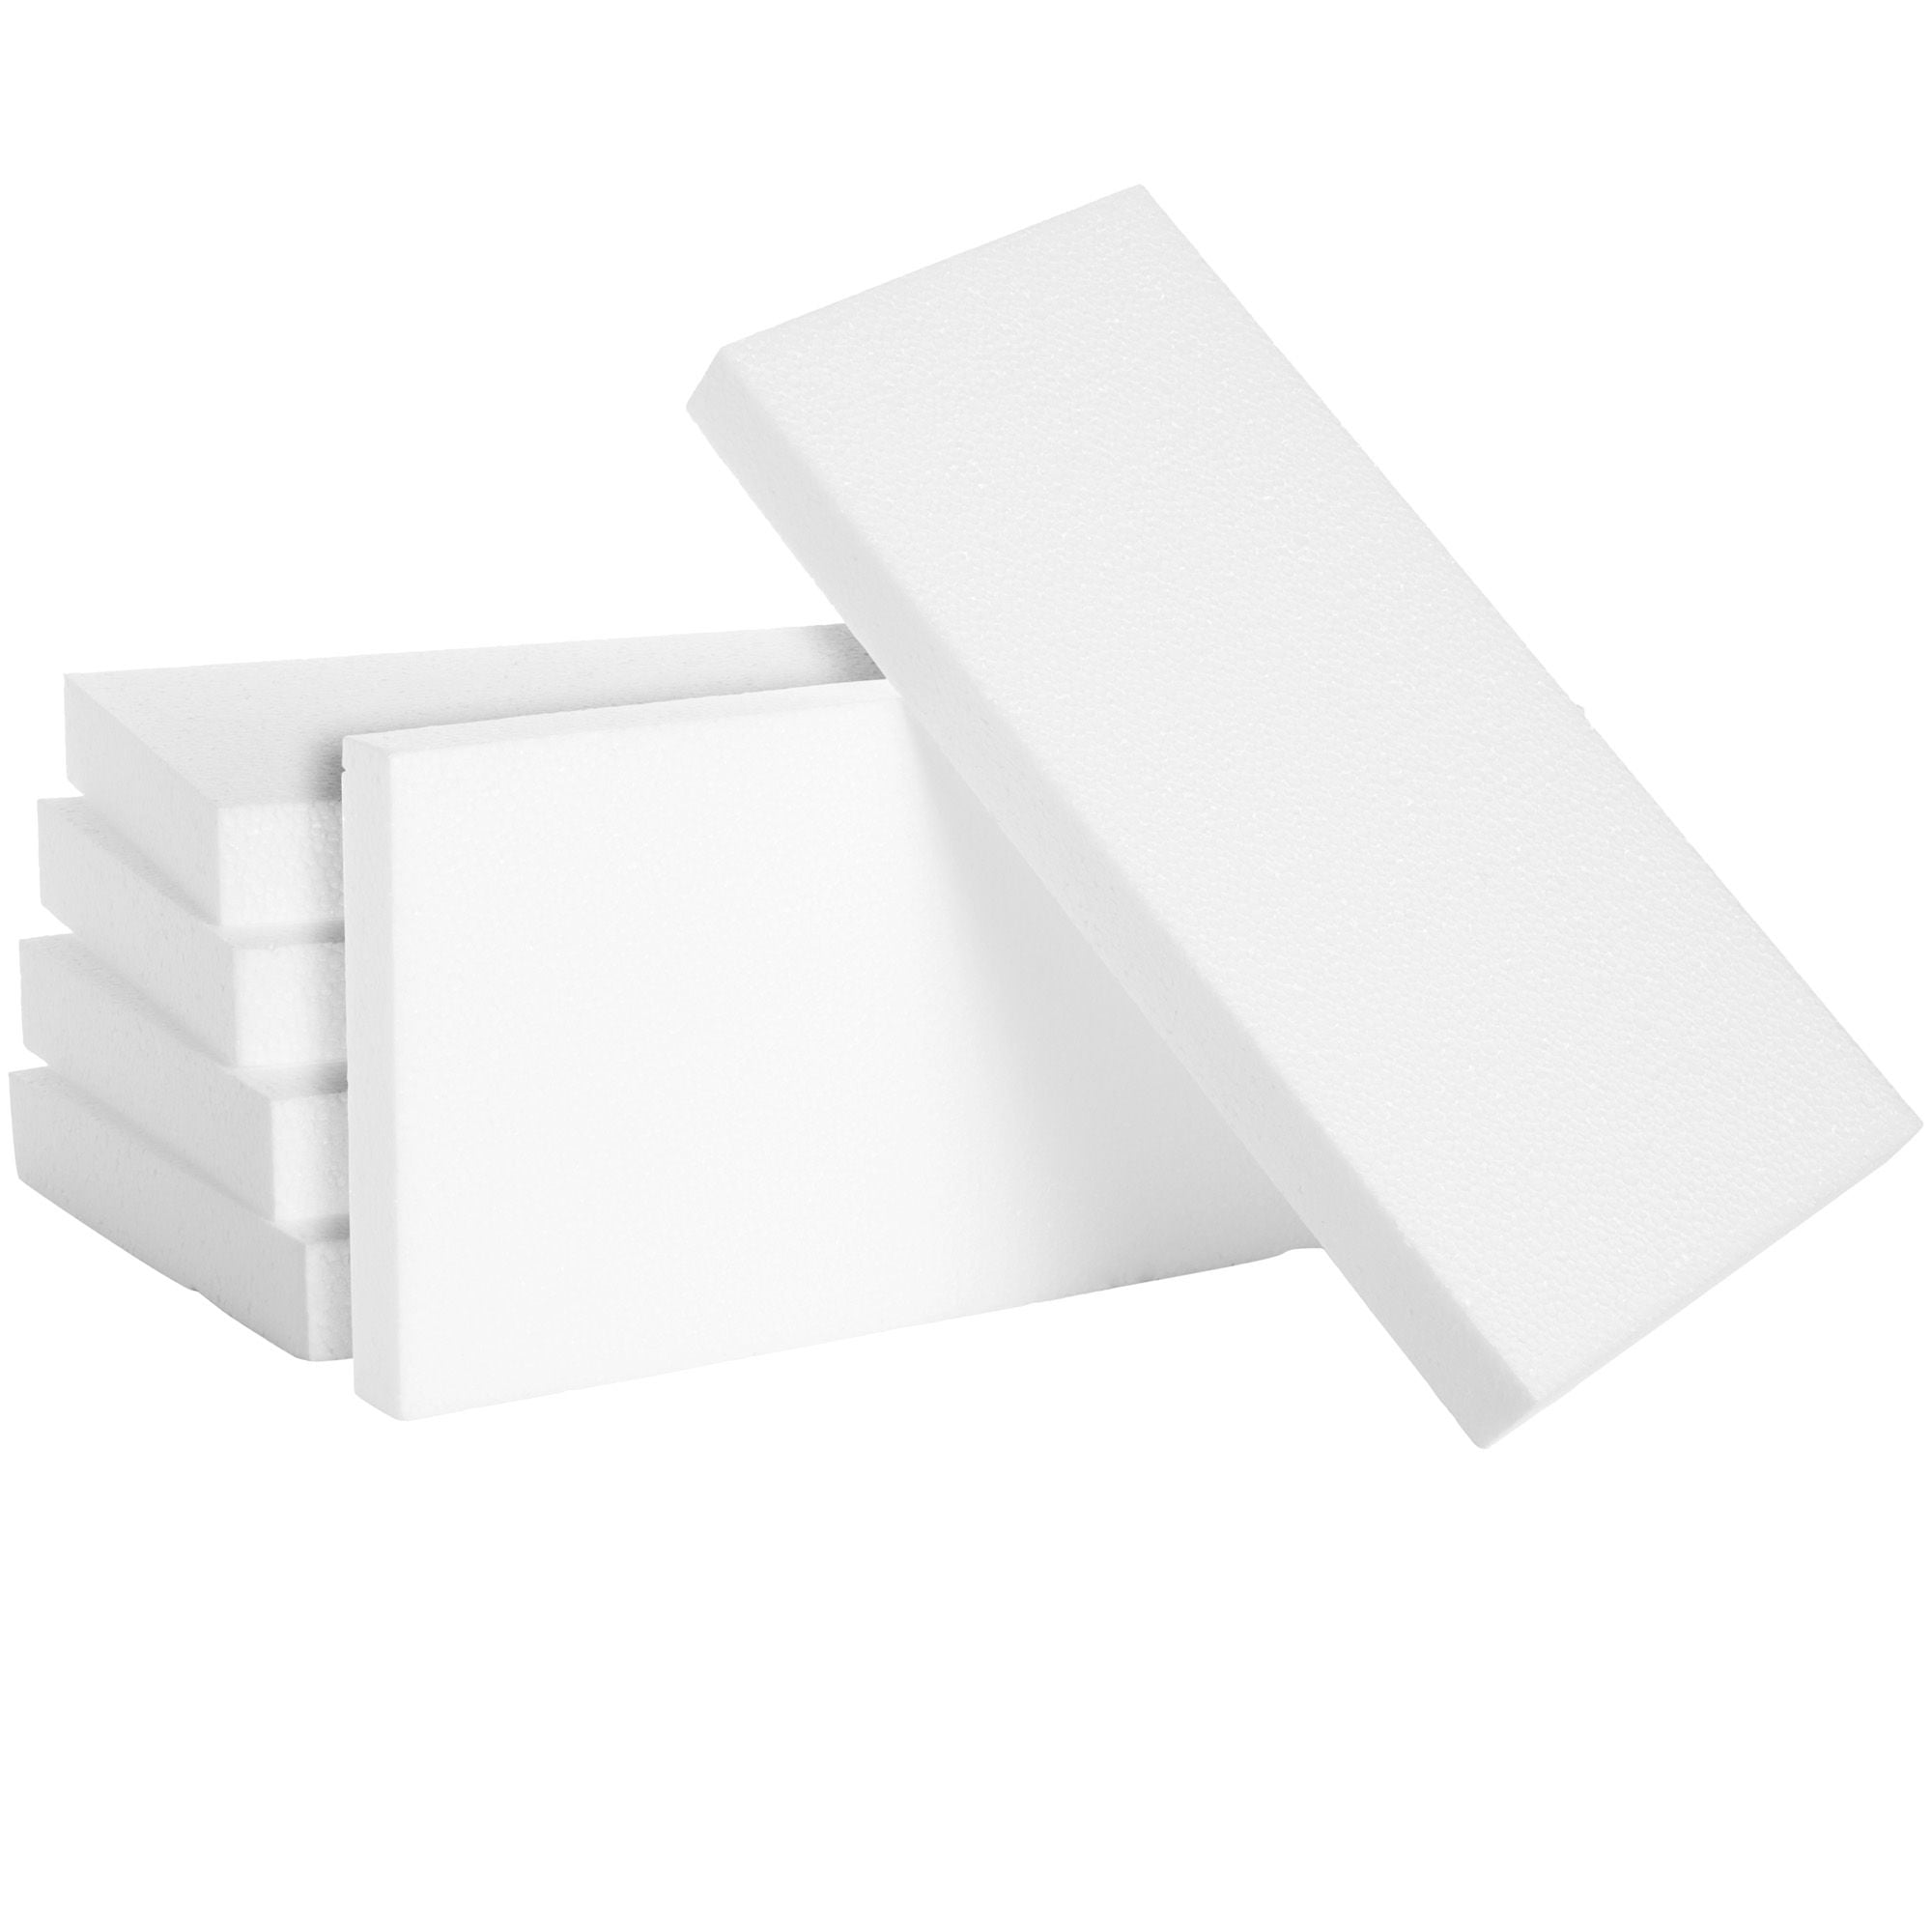 DOITOOL Sheet foam inserts for cases toolbox foam inserts foam blocks for  crafts foam for cases packaging foam craft foam block craft storage drawers